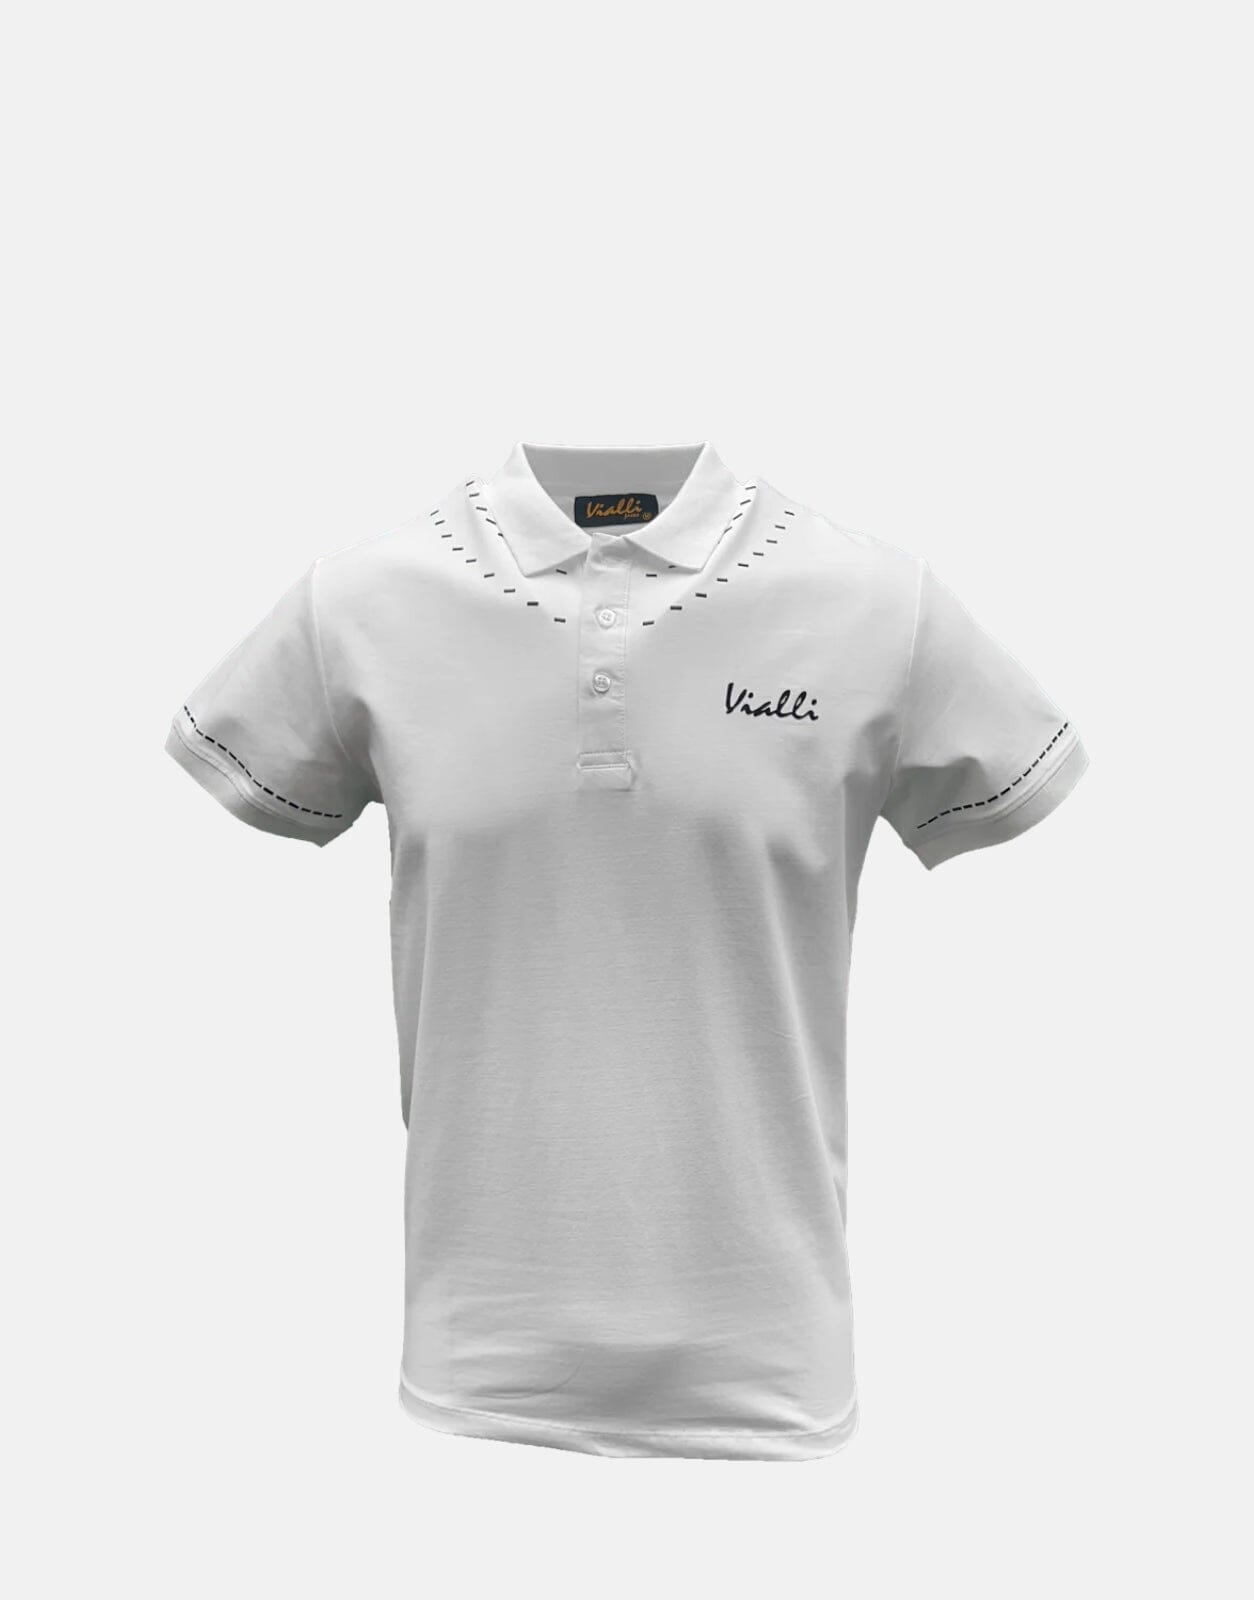 Vialli Flames White Polo Shirt | Subwear